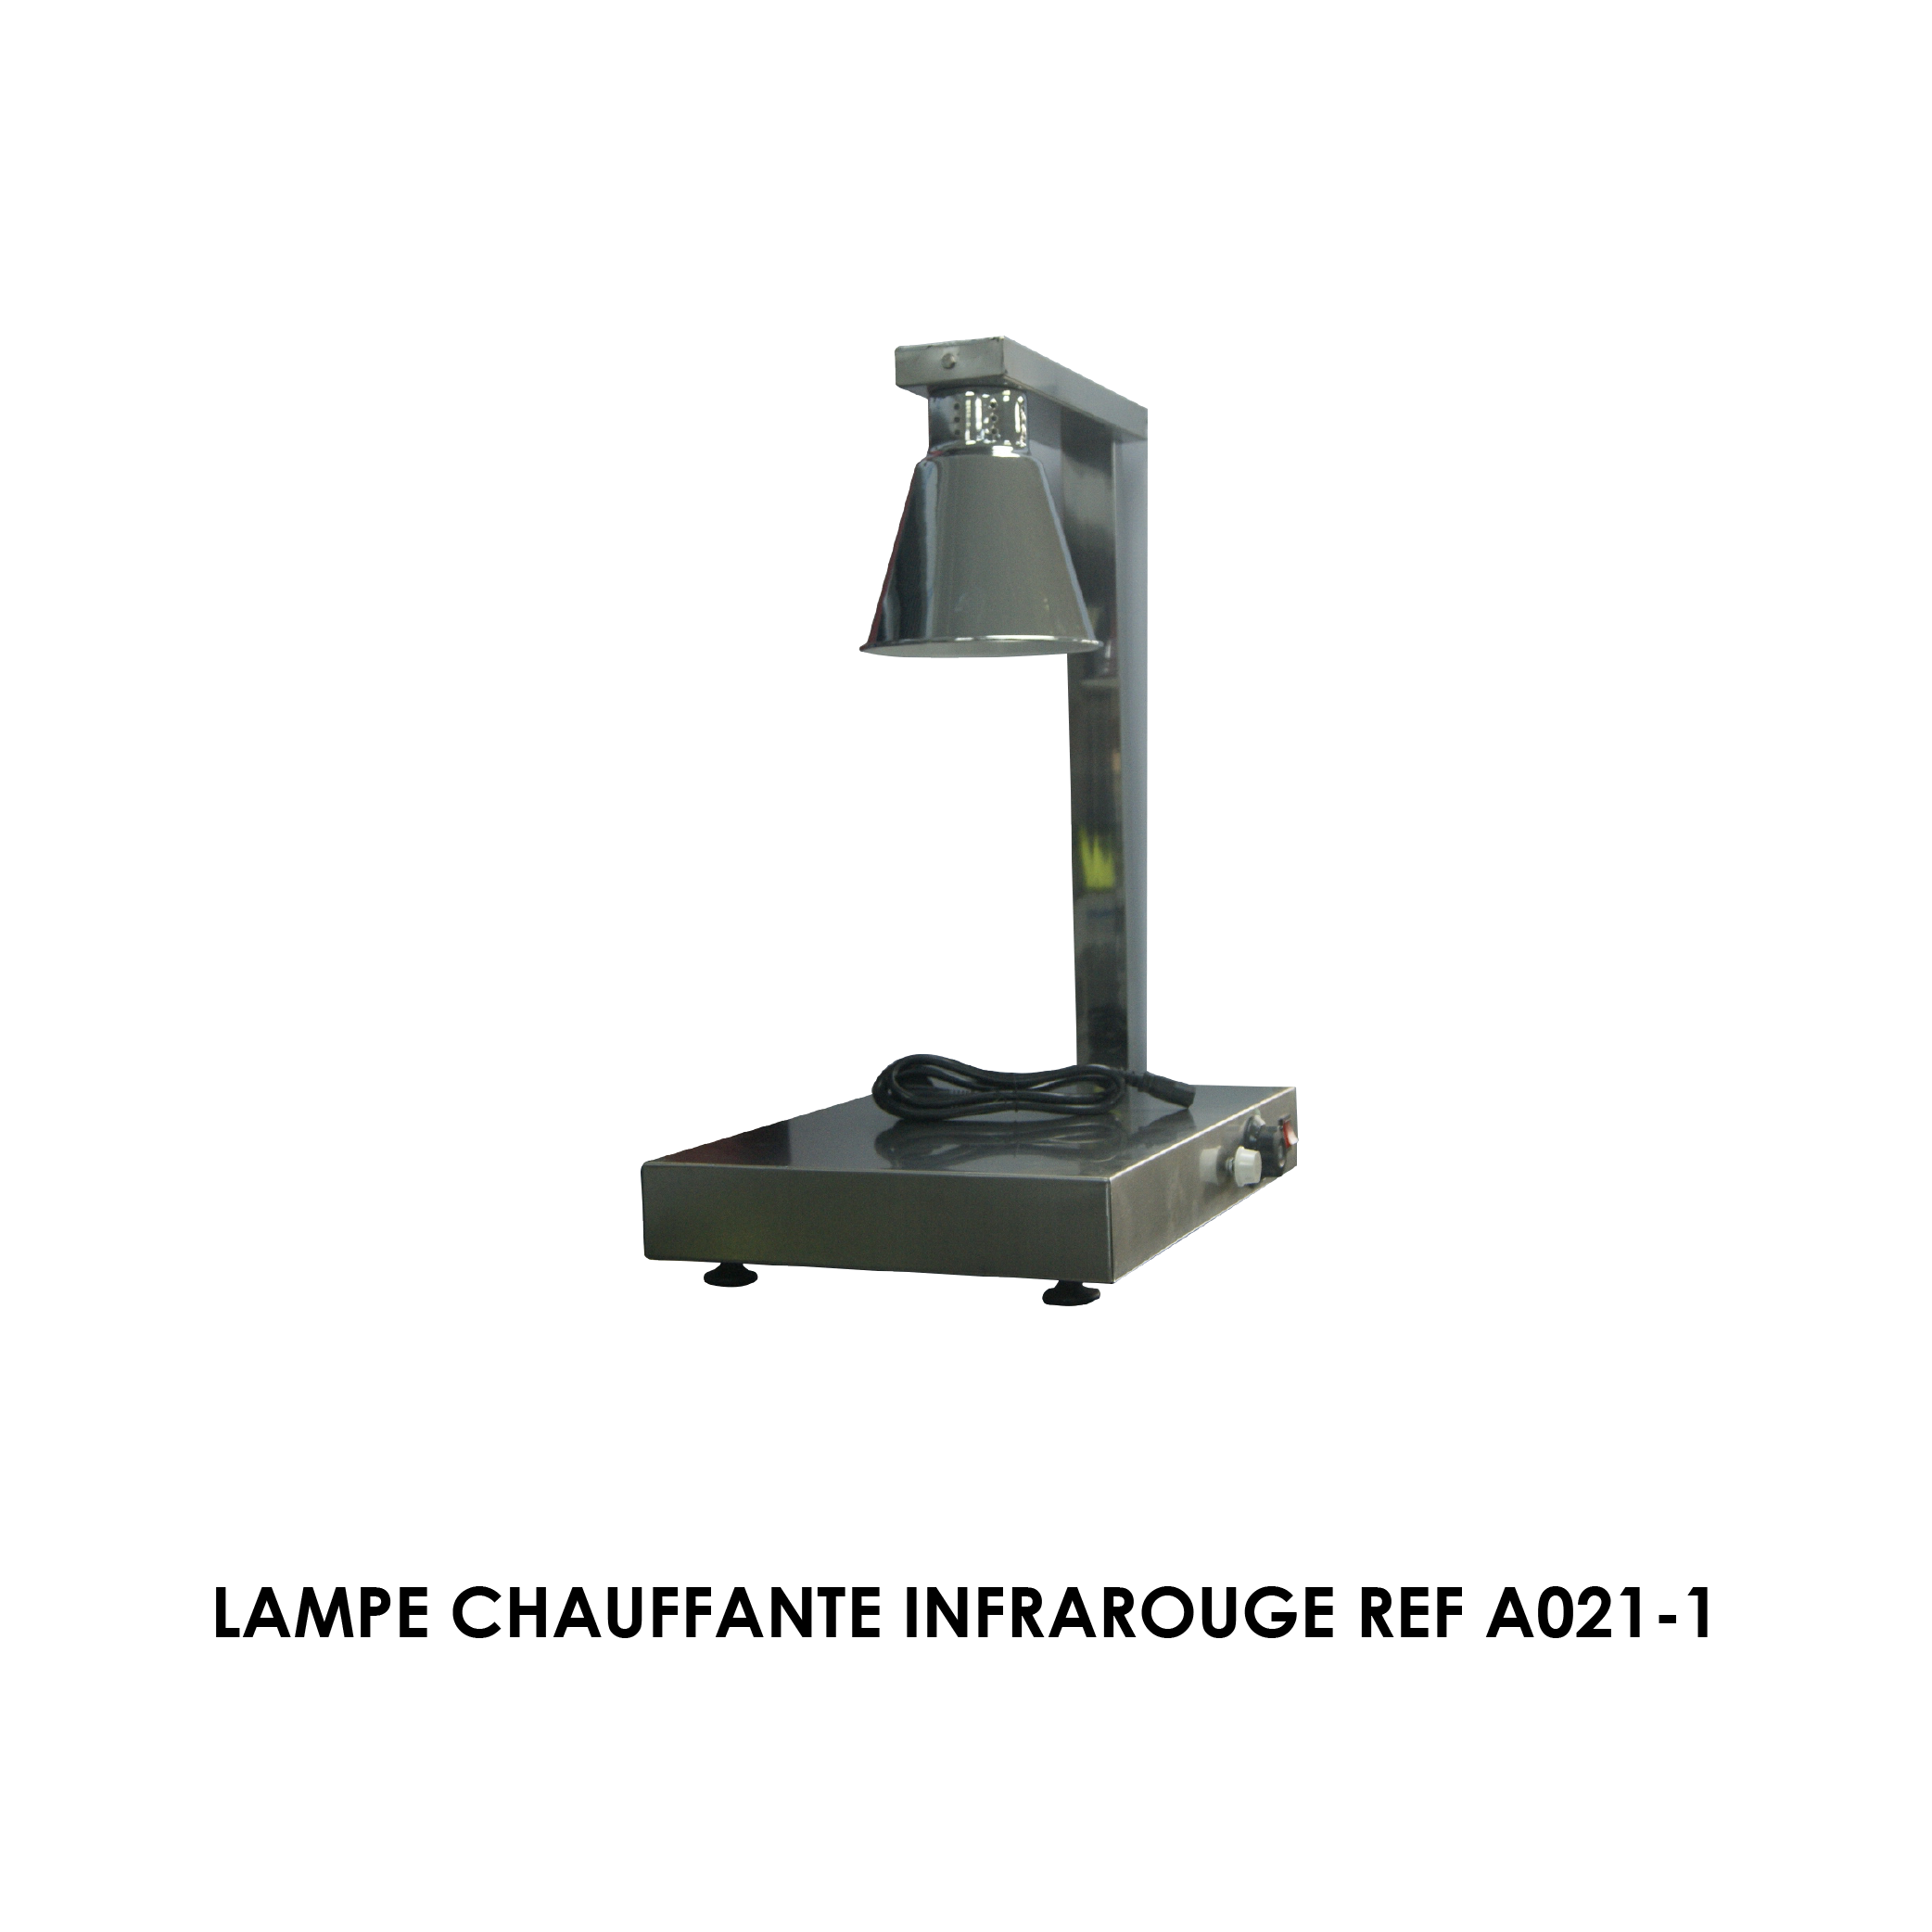 LAMPE CHAUFFANTE INFRAROUGE REF A021-1